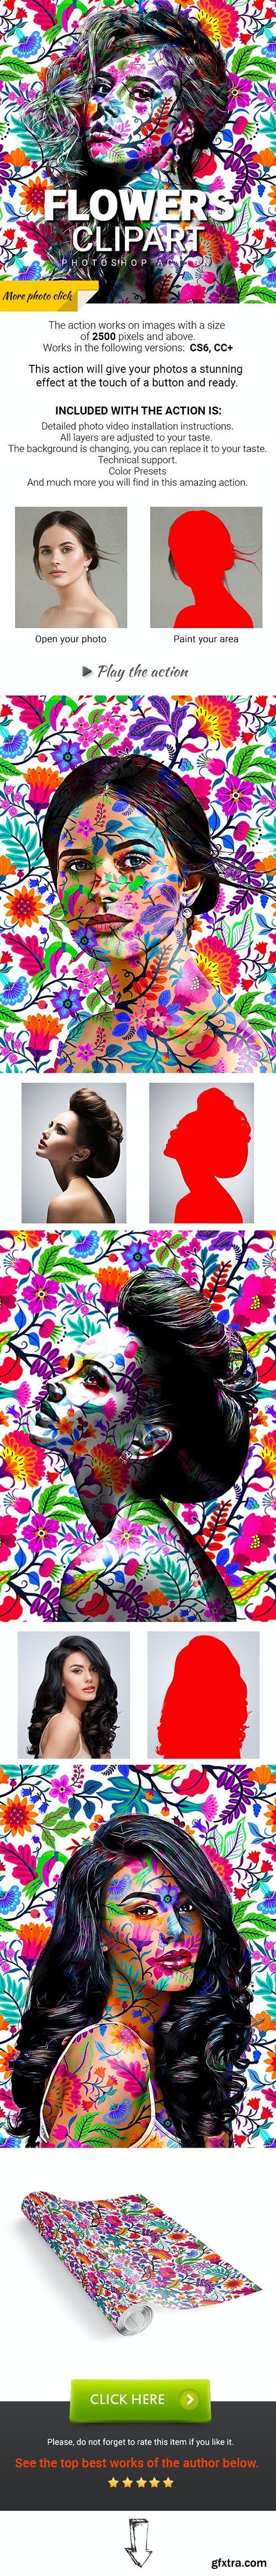 GraphicRiver - Flowers Clipart Photoshop Action 31603326